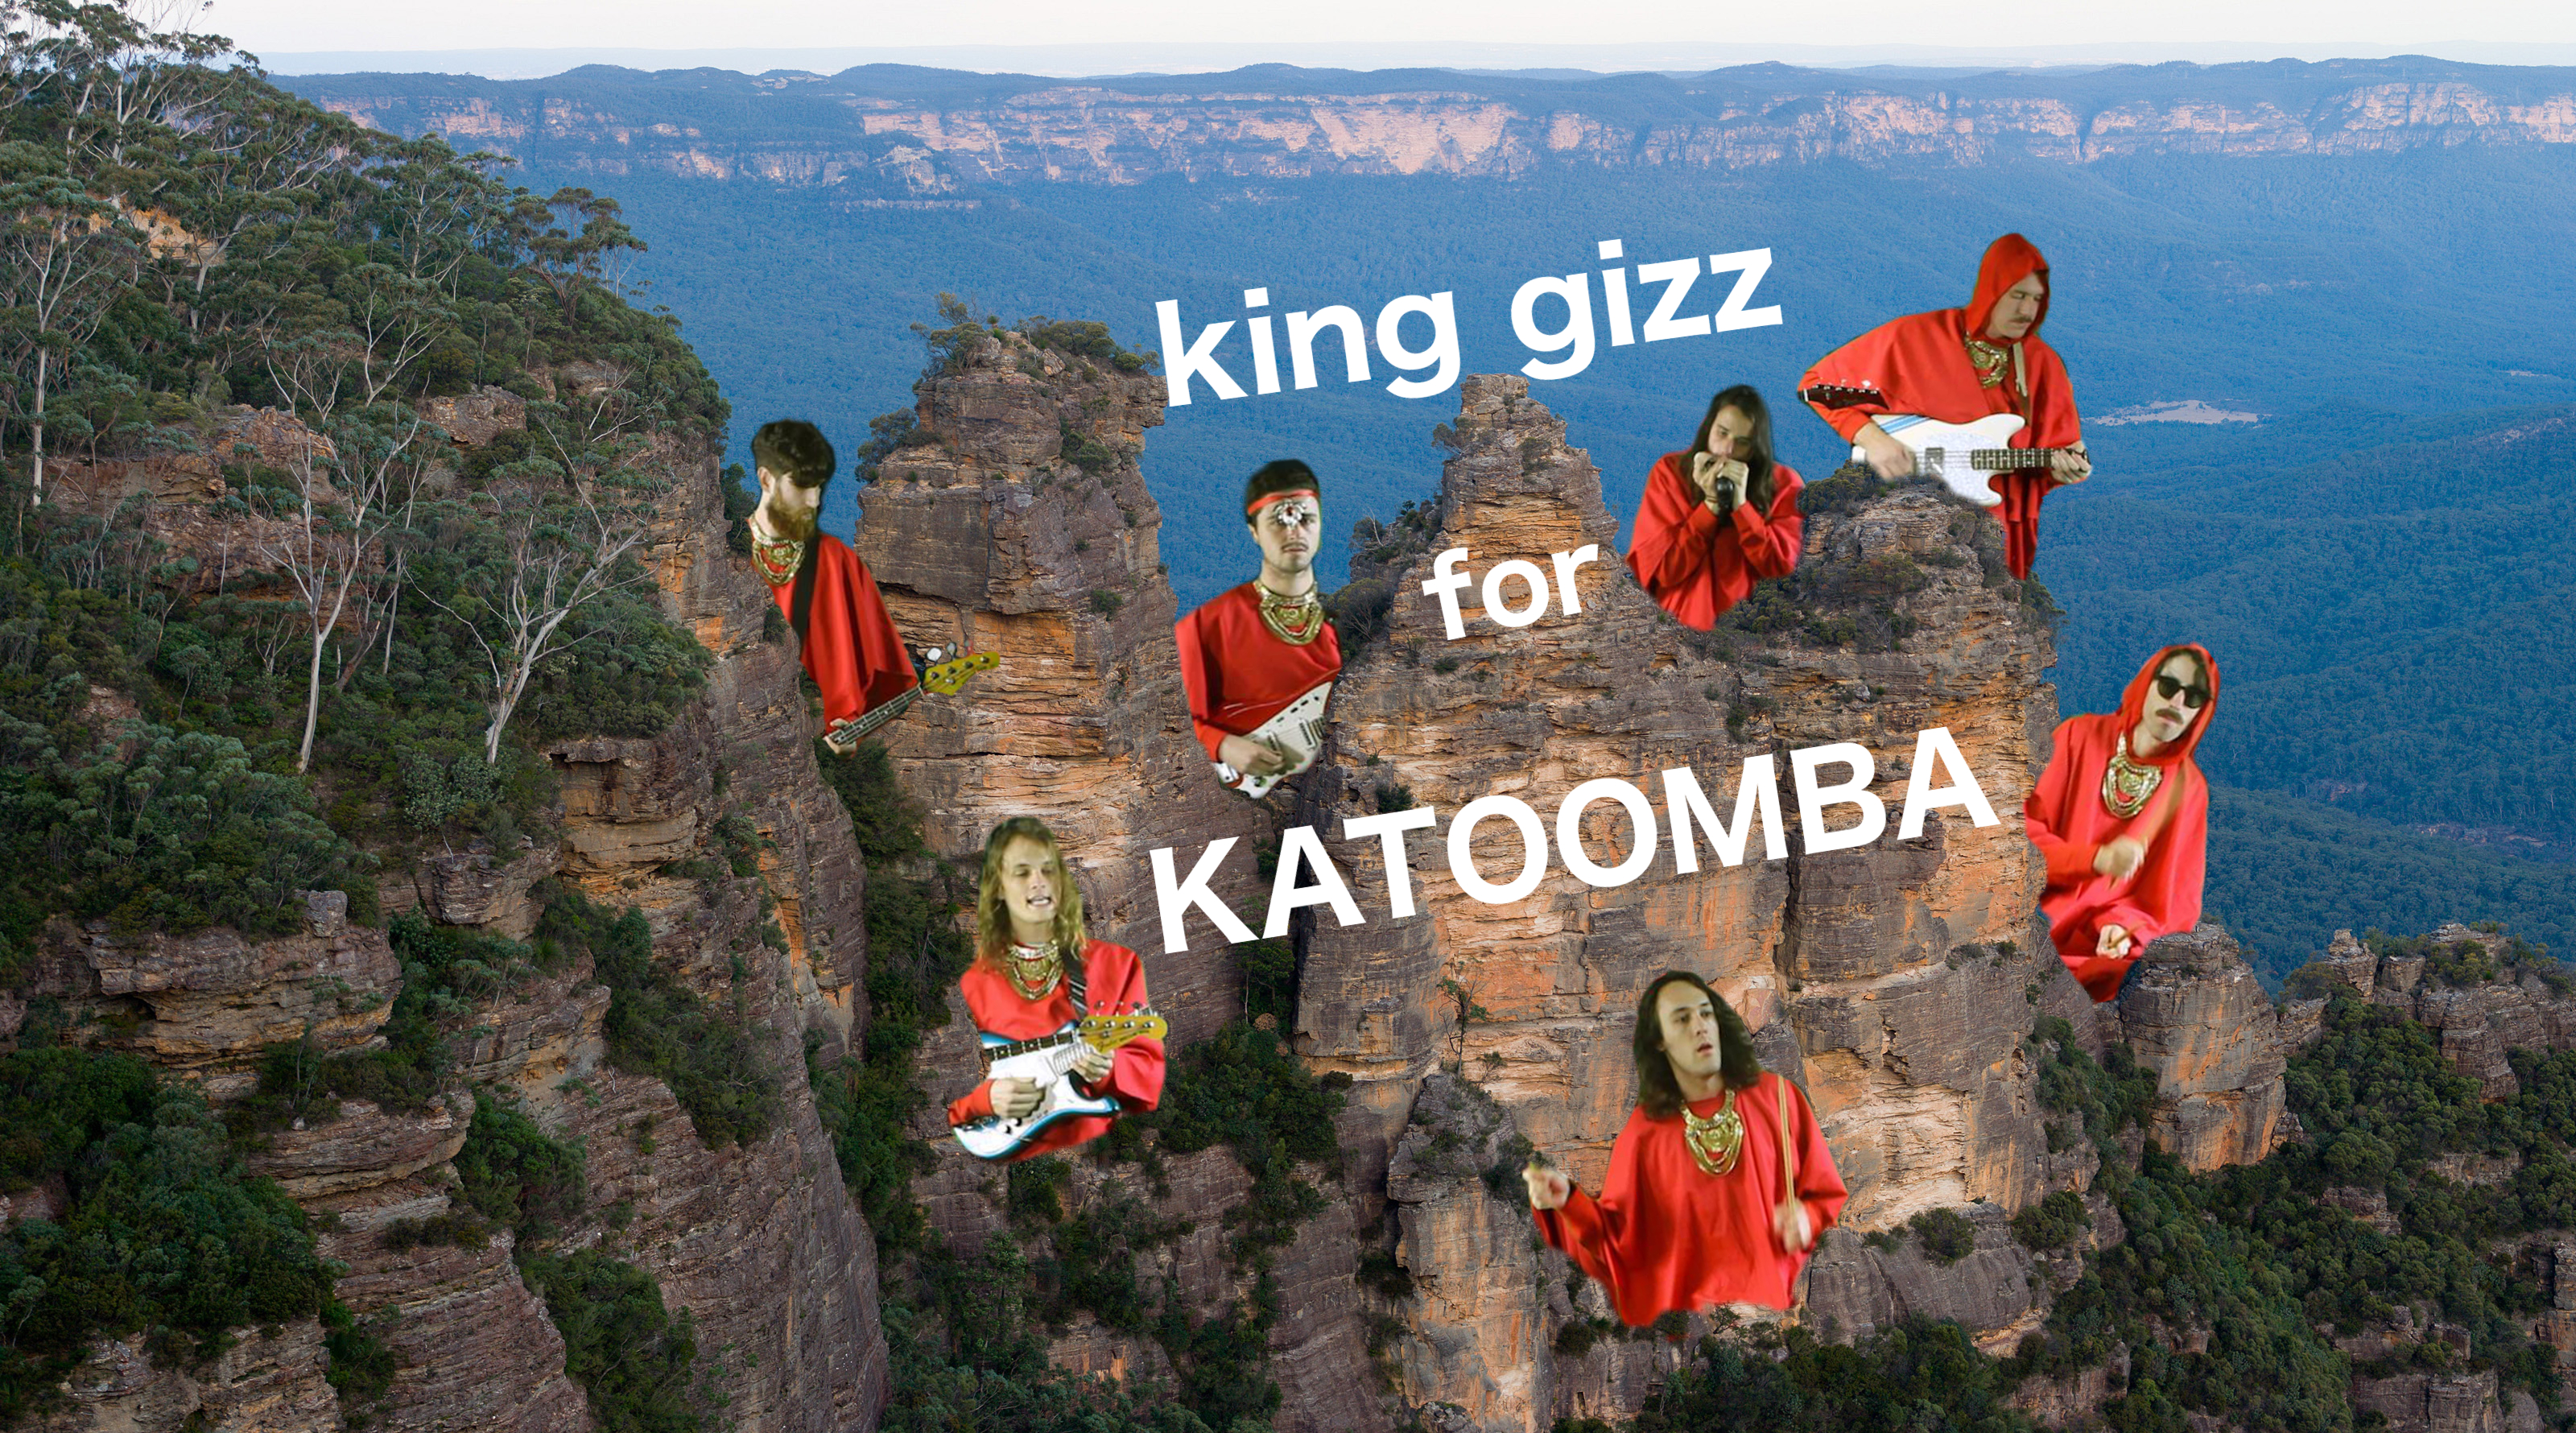 Katoomba Calling for King Gizzard - blog post image 